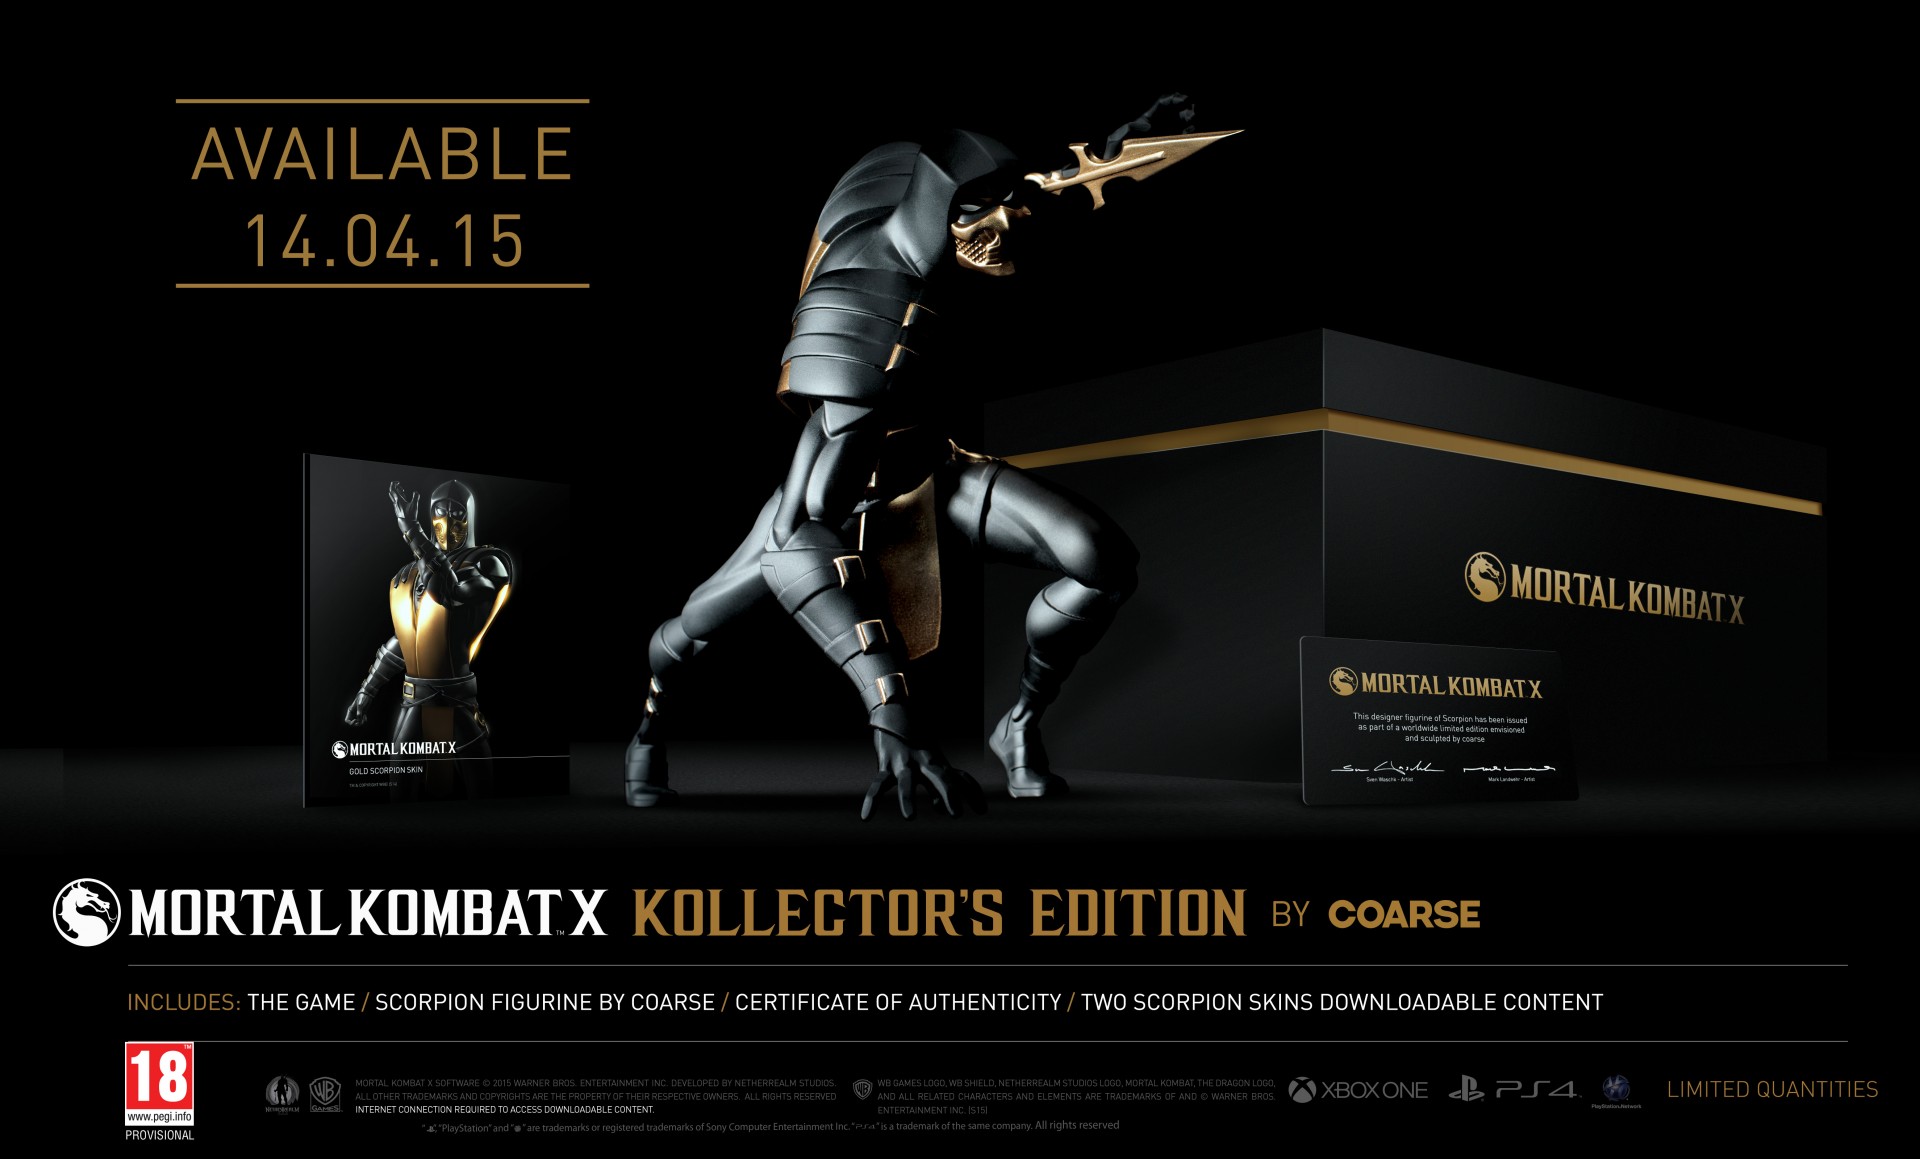 mortal-kombat-x-kollectors-edition-scorpion-figurine-by-coarse